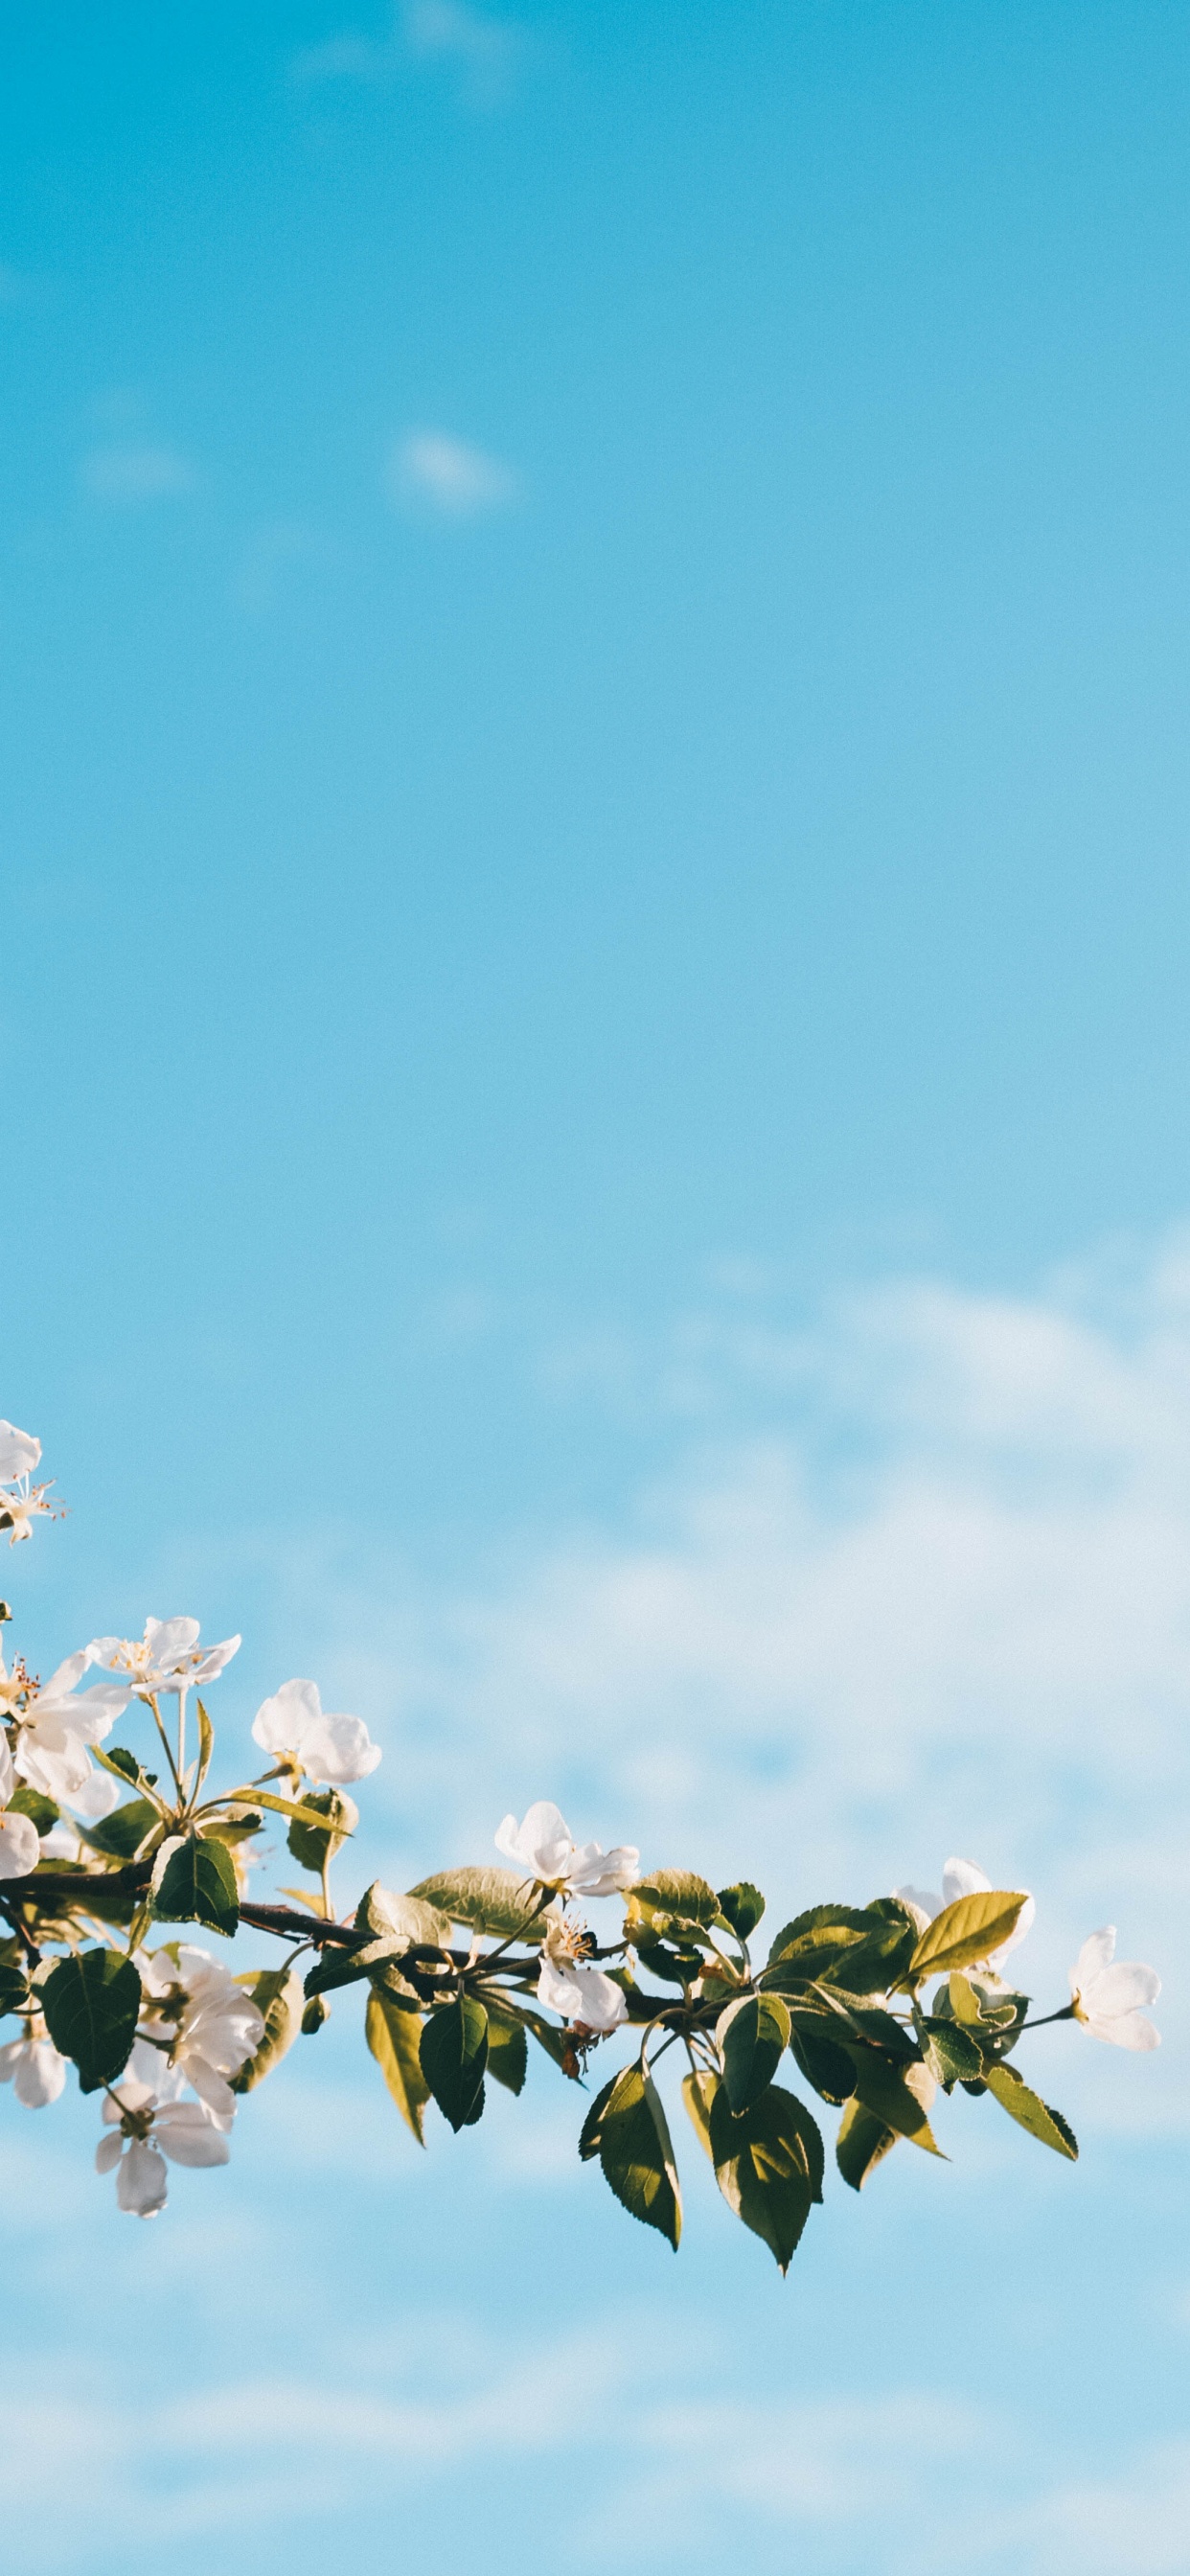 White Cherry Blossom Under Blue Sky During Daytime. Wallpaper in 1242x2688 Resolution